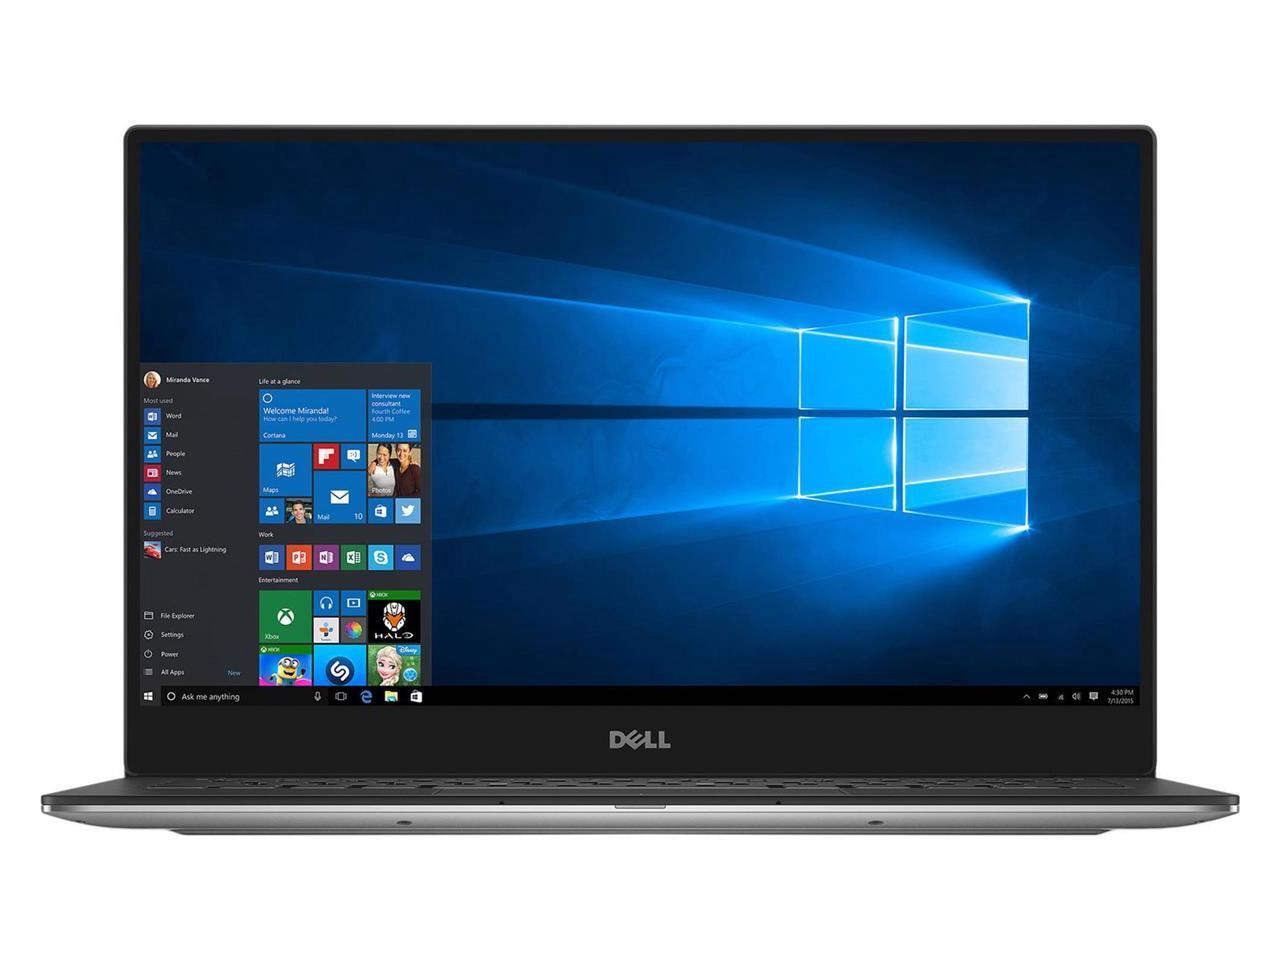 Dell XPS 13 9360 13.3" QHD+ WLED Touch Display Notebook, 8th Gen Intel Core i7-8550U 1.8GHz, 16GB Ram, 512GB SSD, Windows 10 Home - 1-Year Dell Warranty